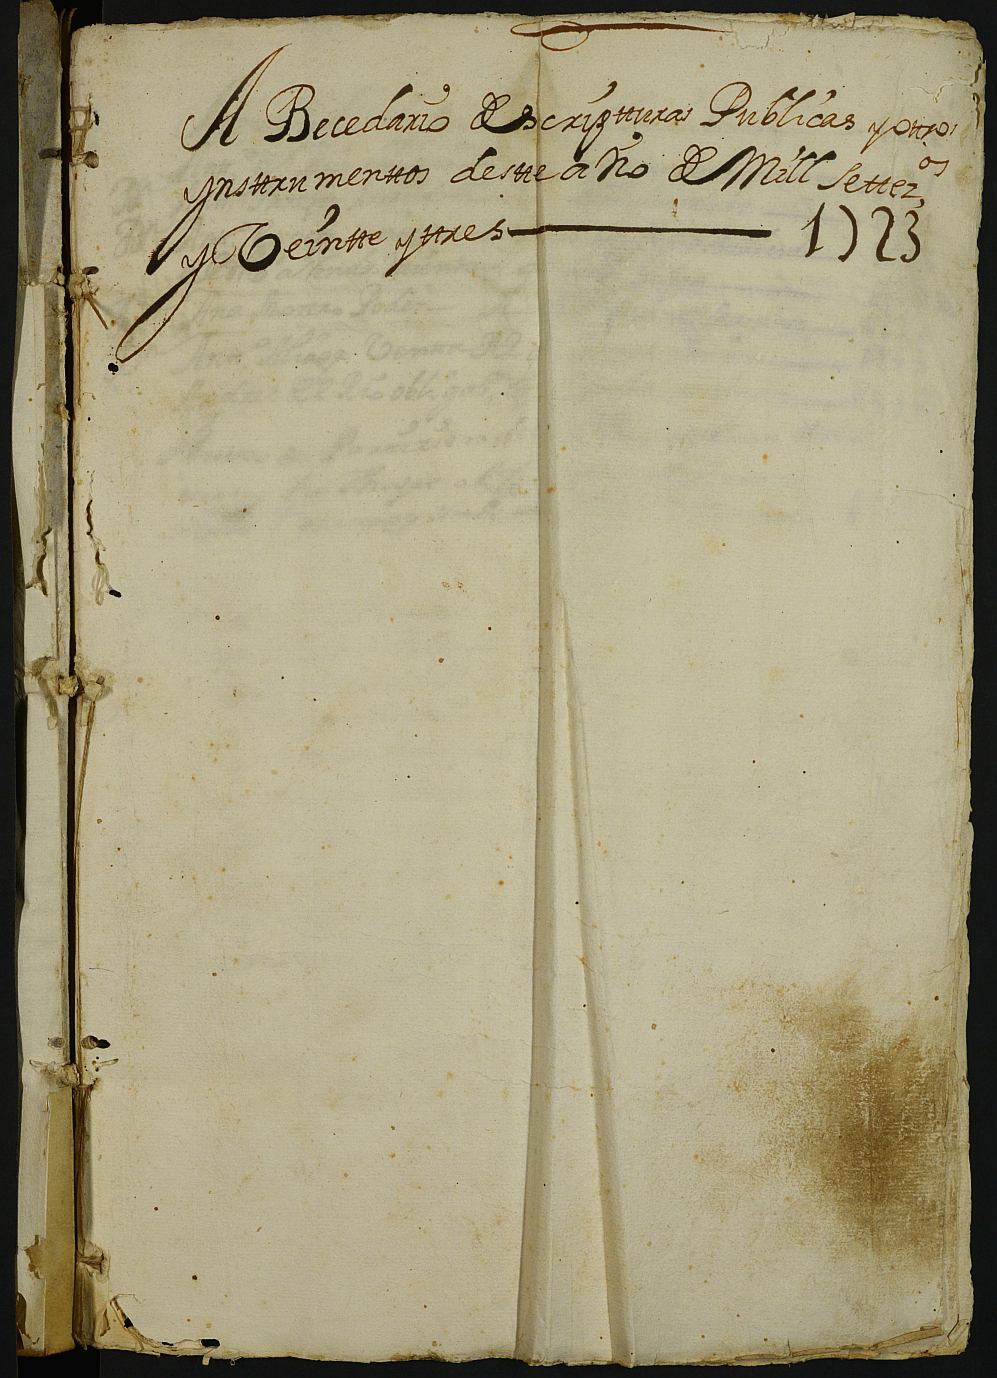 Registro de Jorge Pérez Mesía, Murcia de 1723.